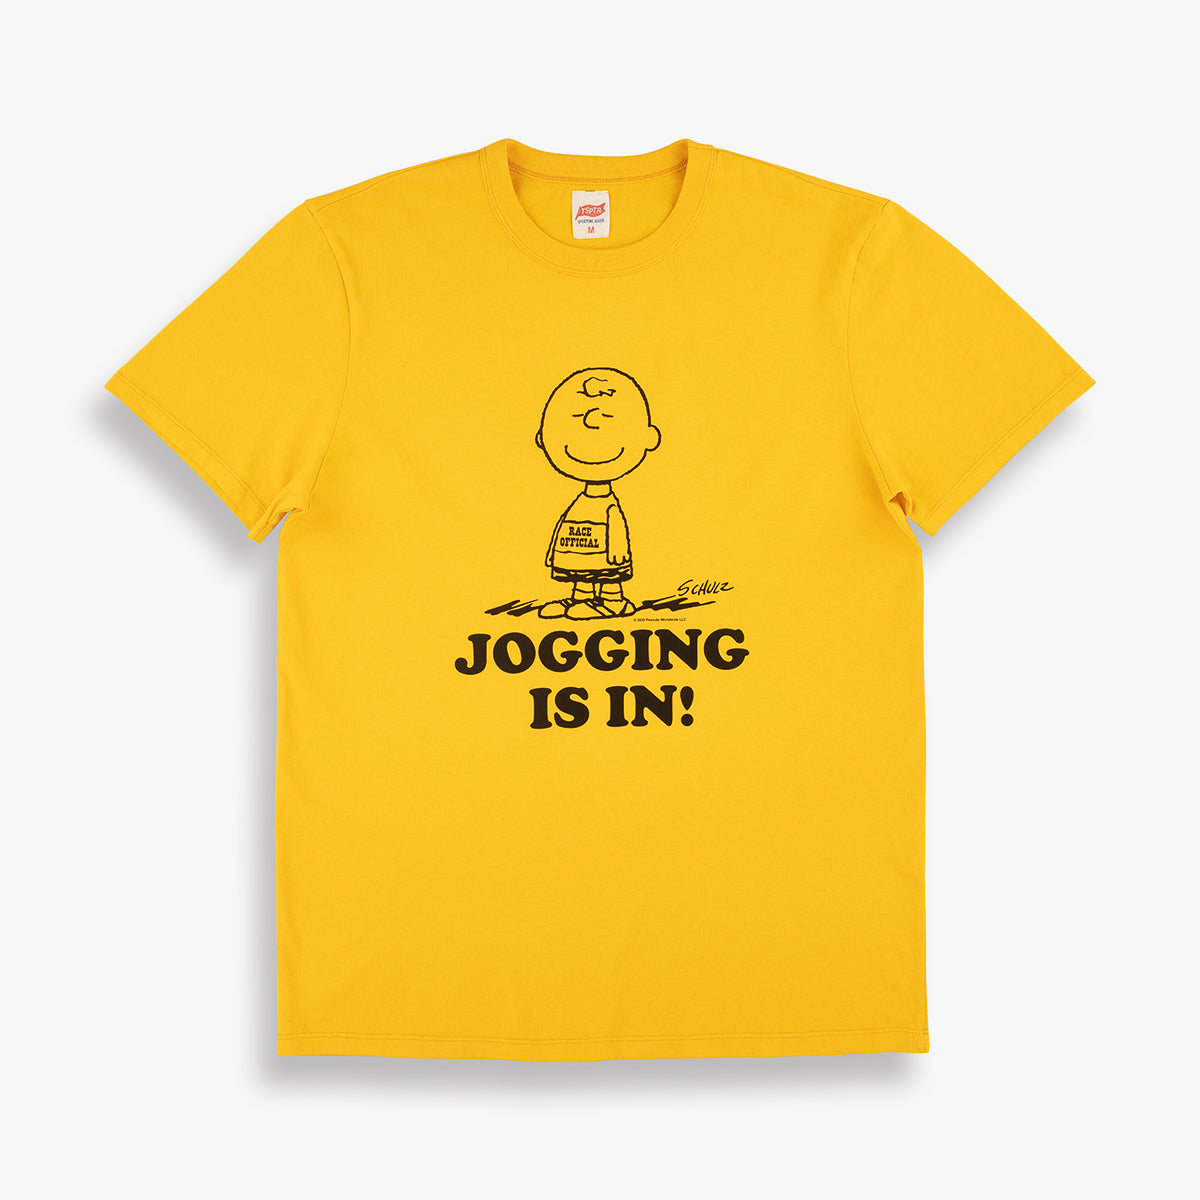 Jogging is in! Tee